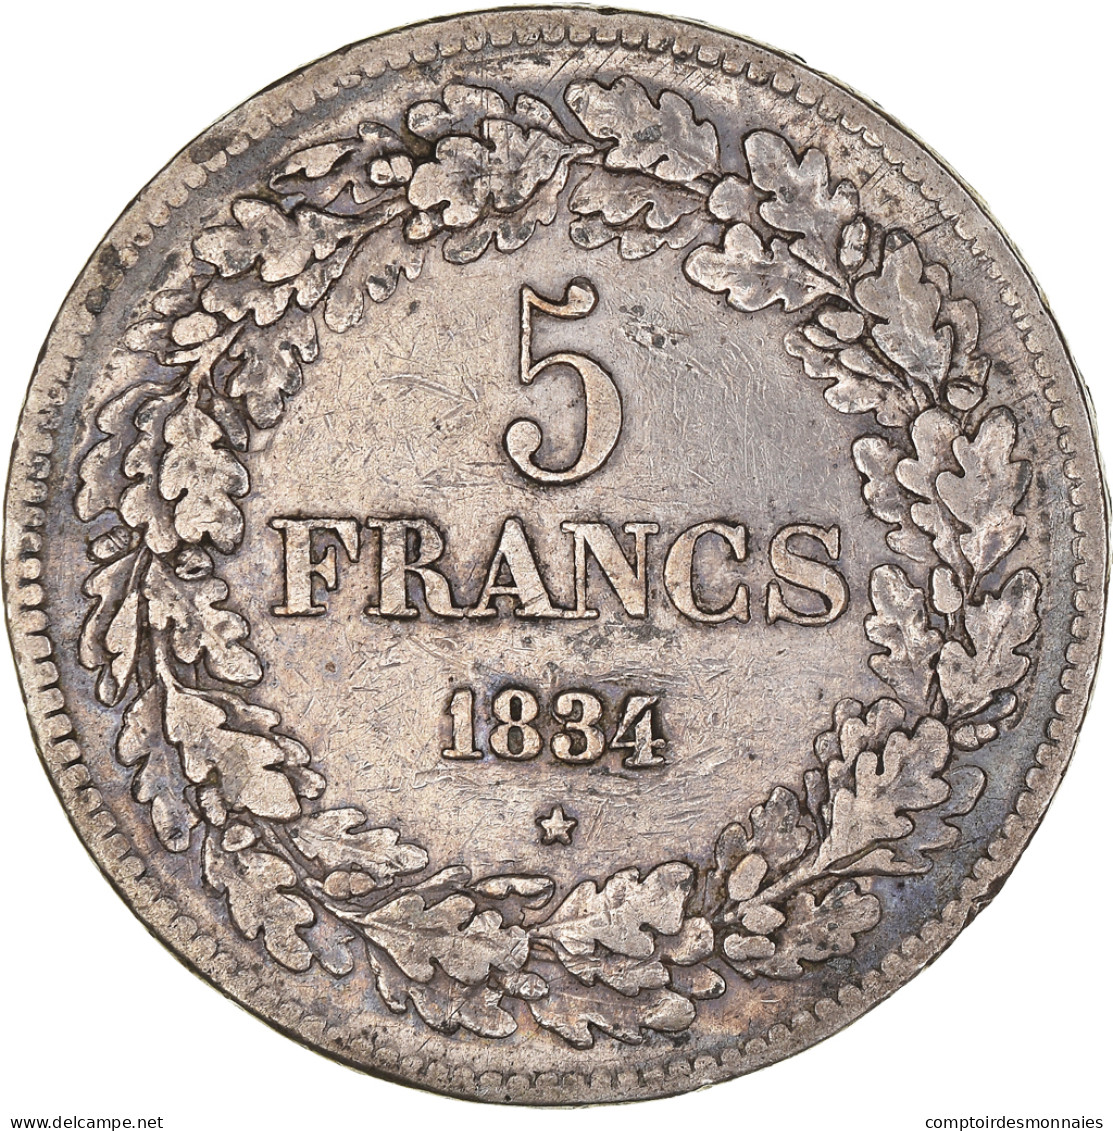 Monnaie, Belgique, Leopold I, 5 Francs, 5 Frank, 1834, Tranche B, TB+, Argent - 5 Frank